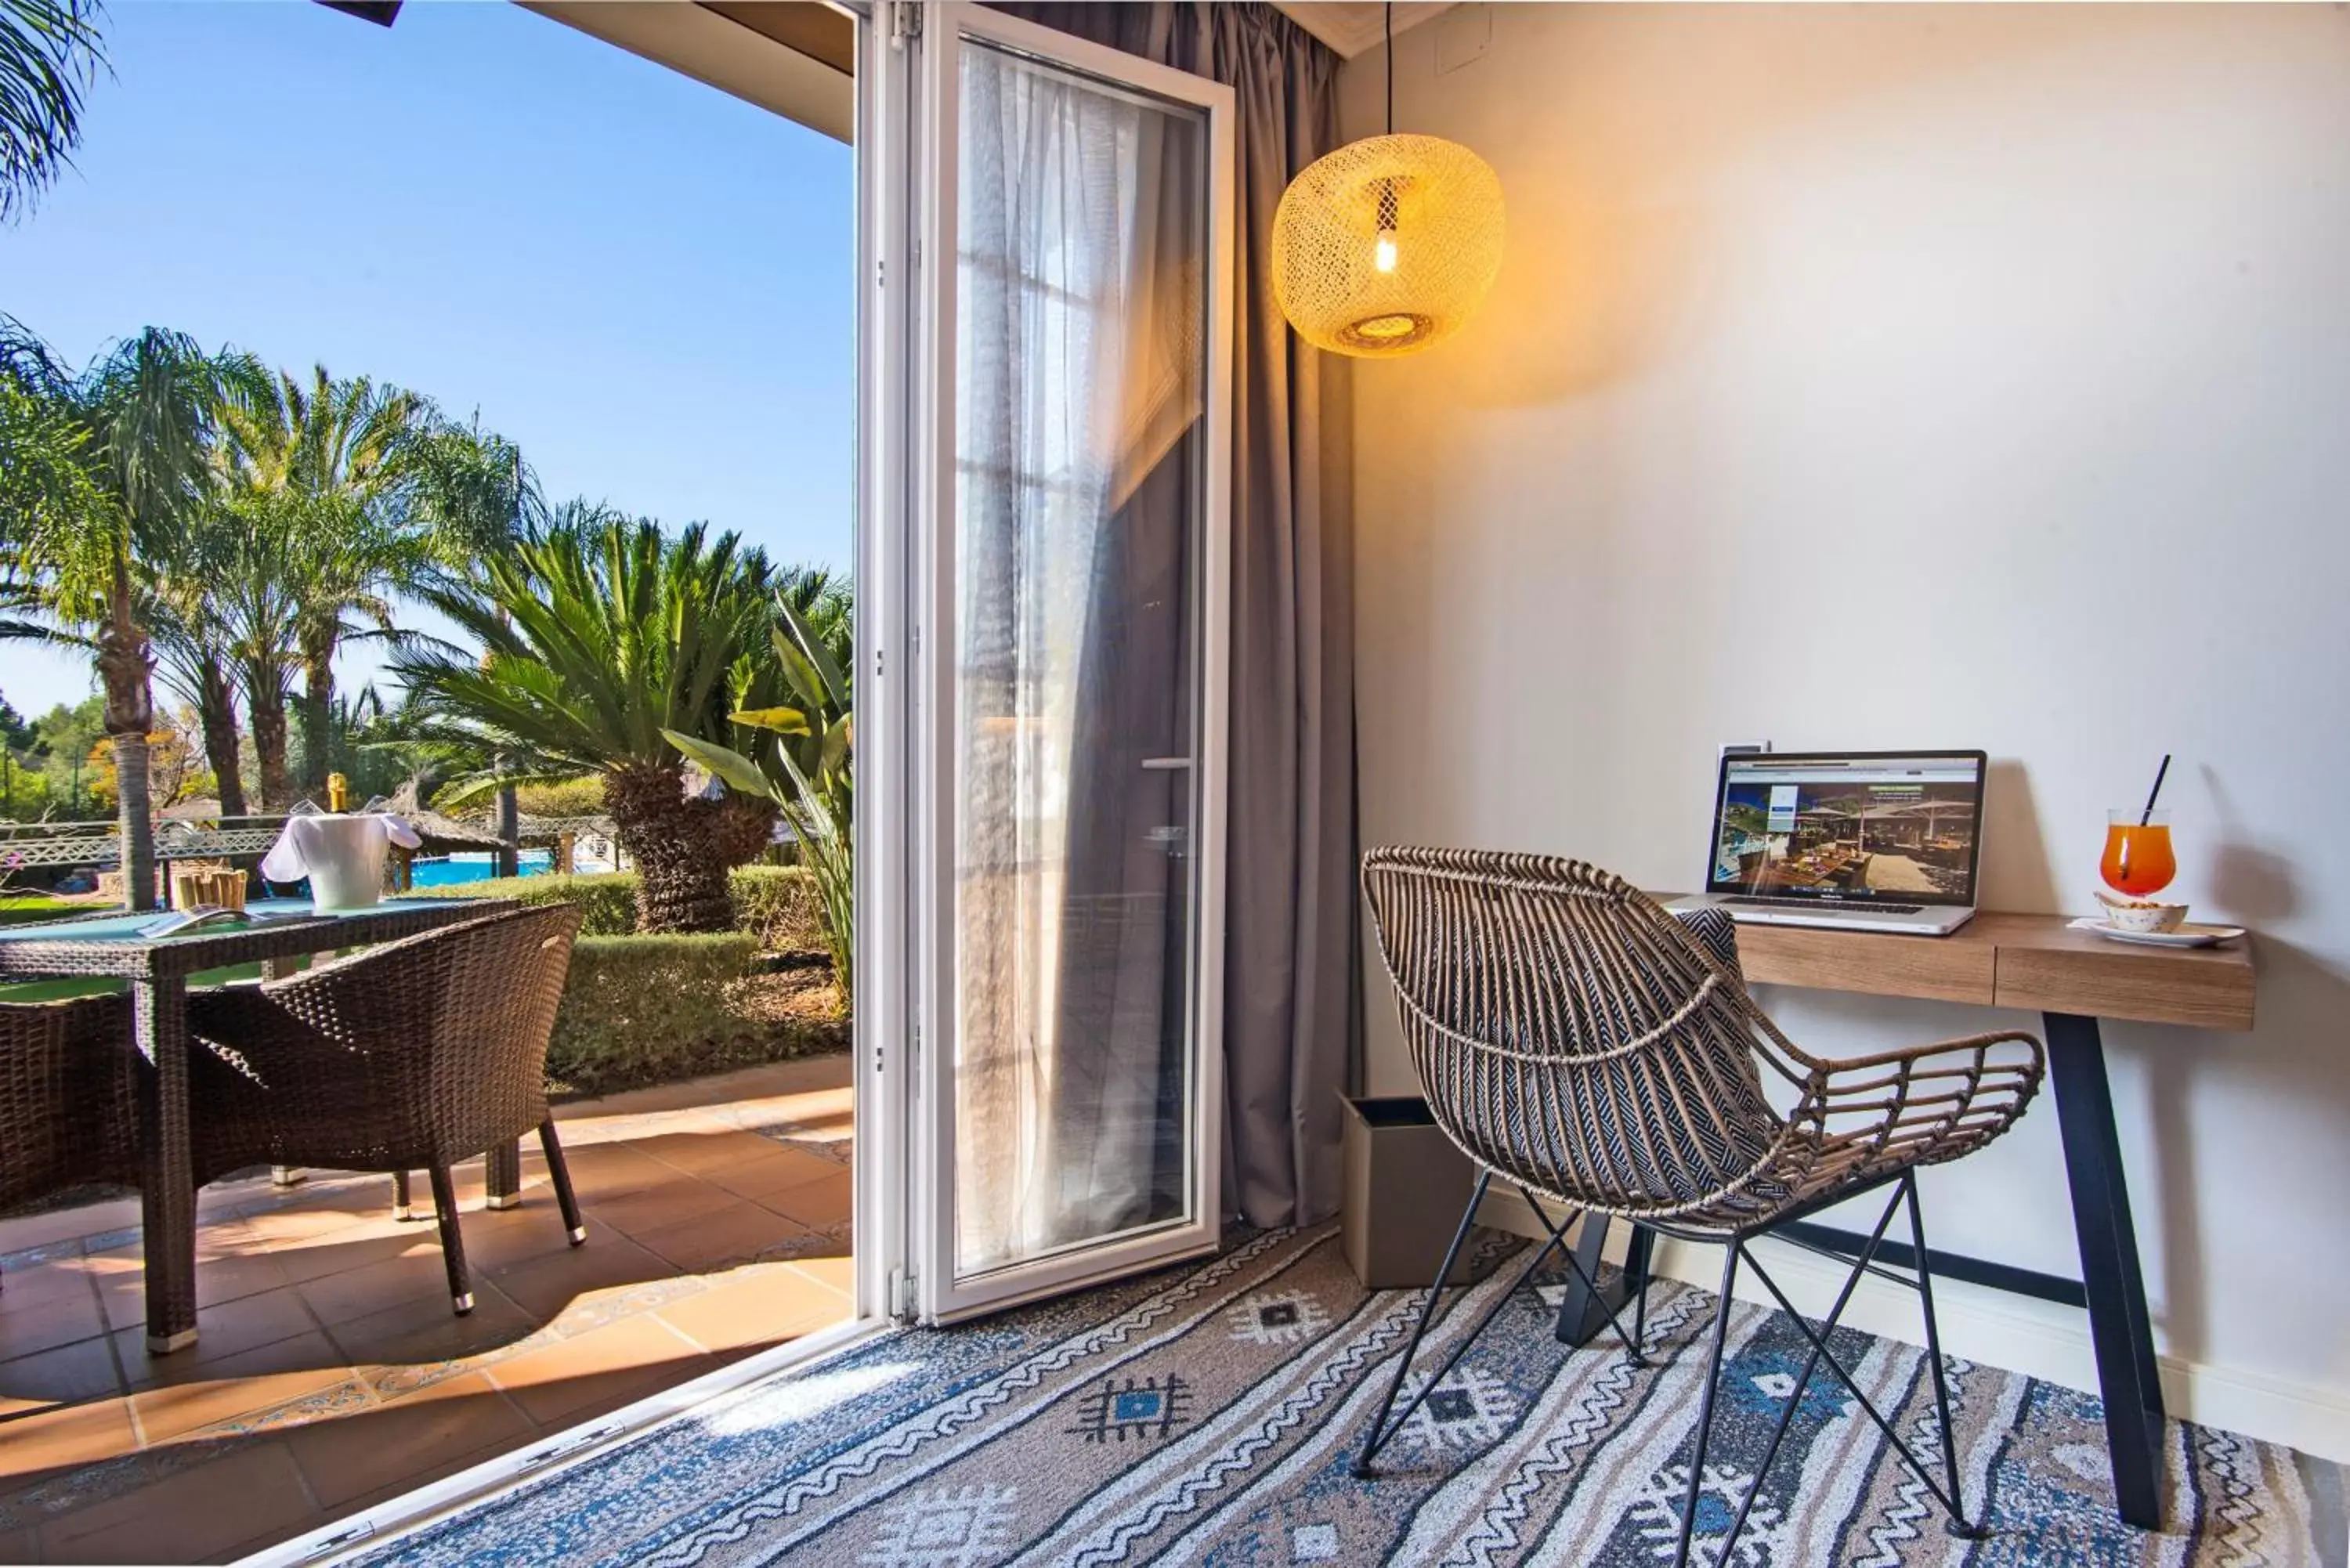 Garden view in Lindner Hotel Mallorca Portals Nous, part of JdV by Hyatt